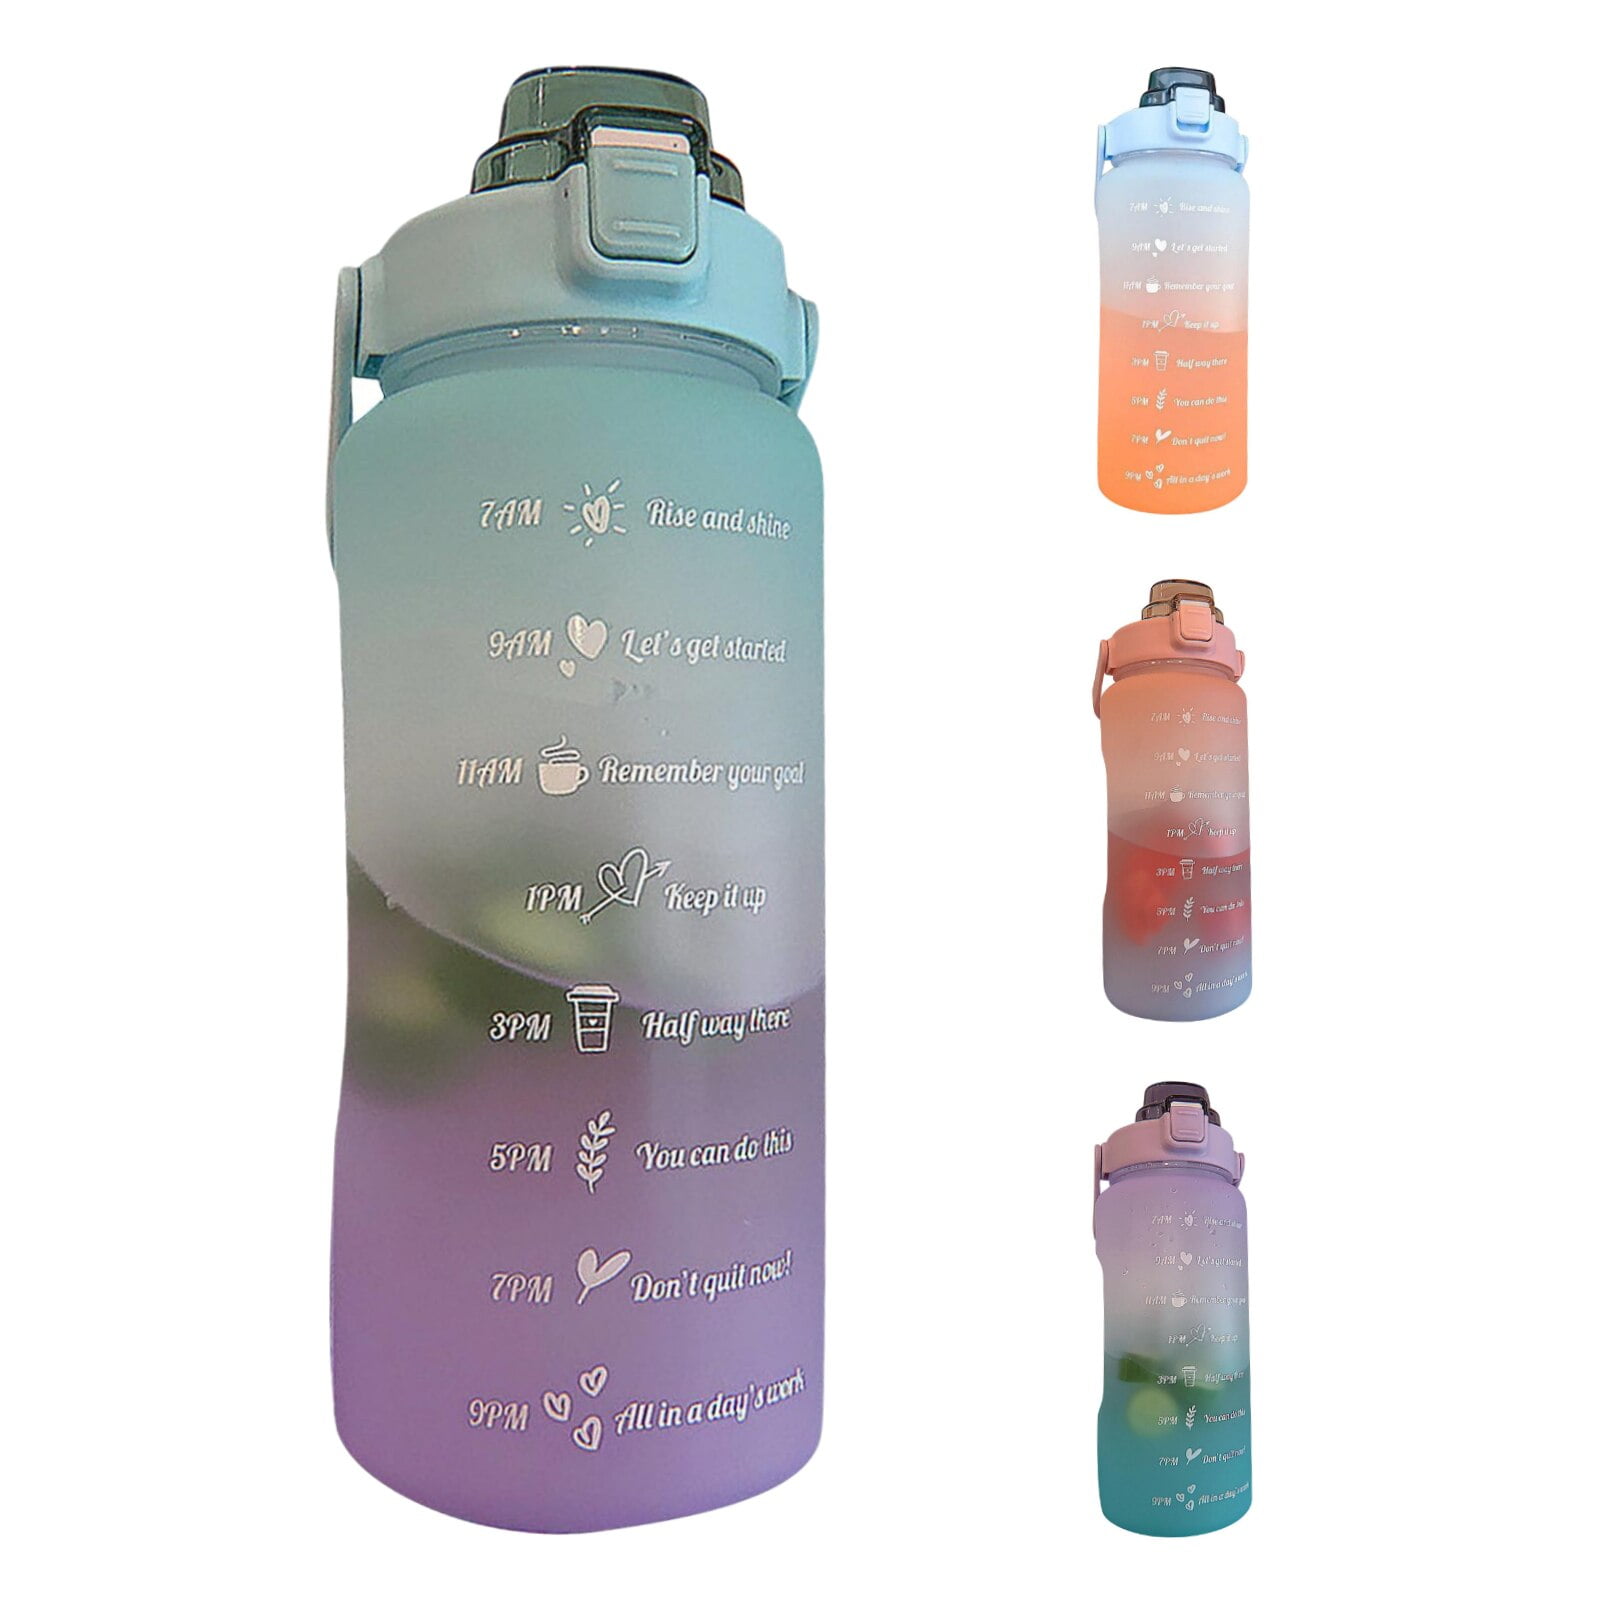 Family Pack  Daily 8® Water Bottles - 2 Liter / 64 oz Water Jug